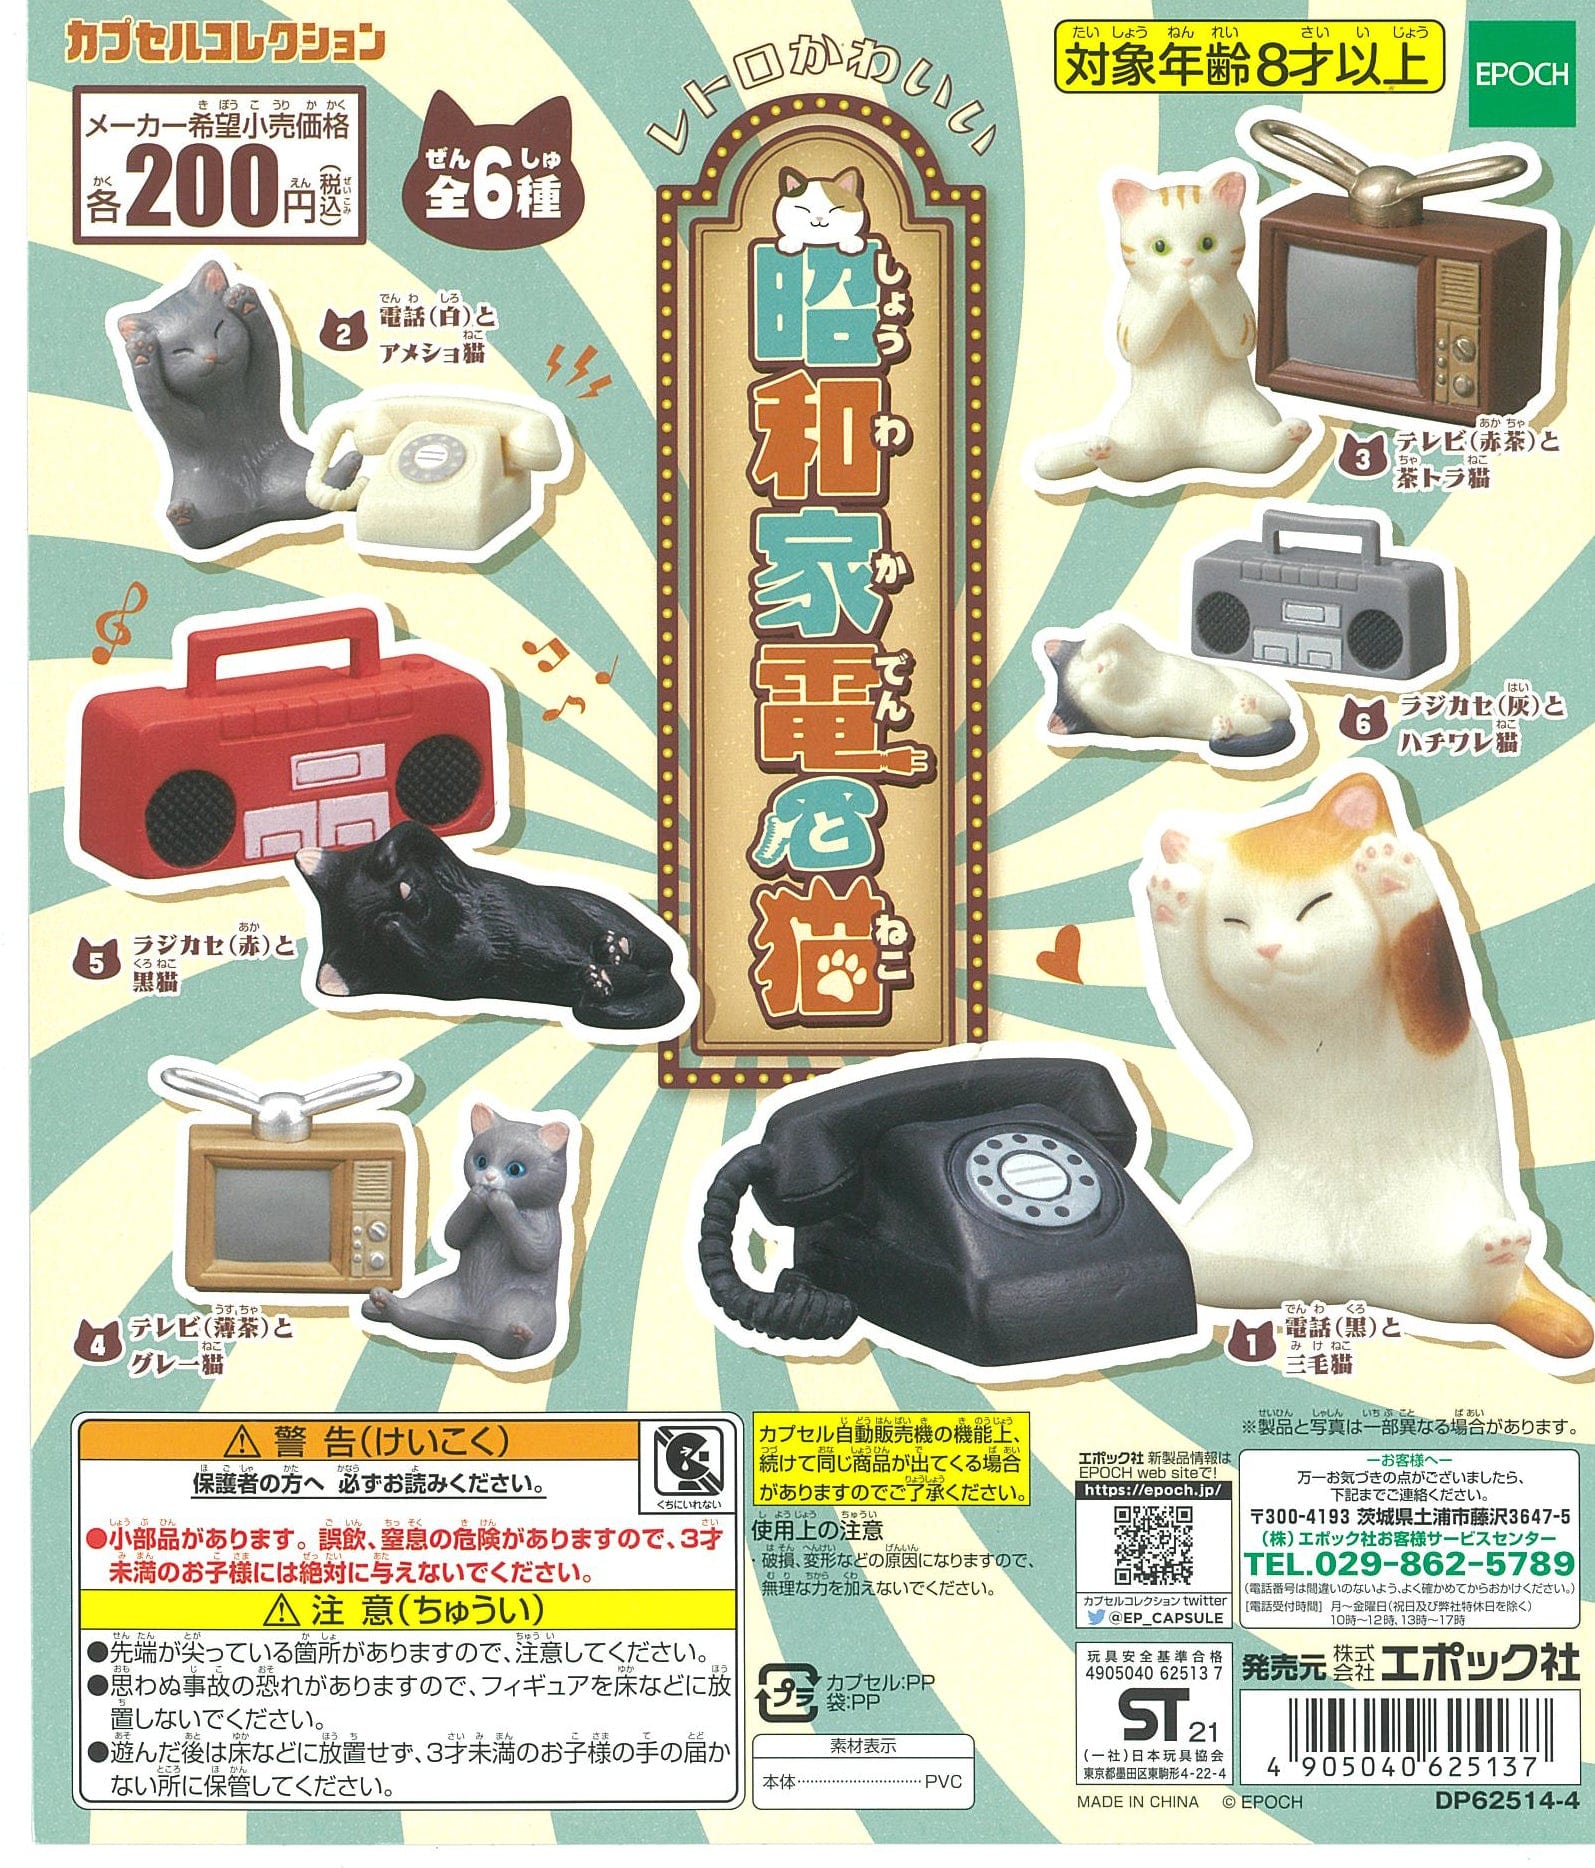 Epoch CP1165 Showa Household Appliance & Cat